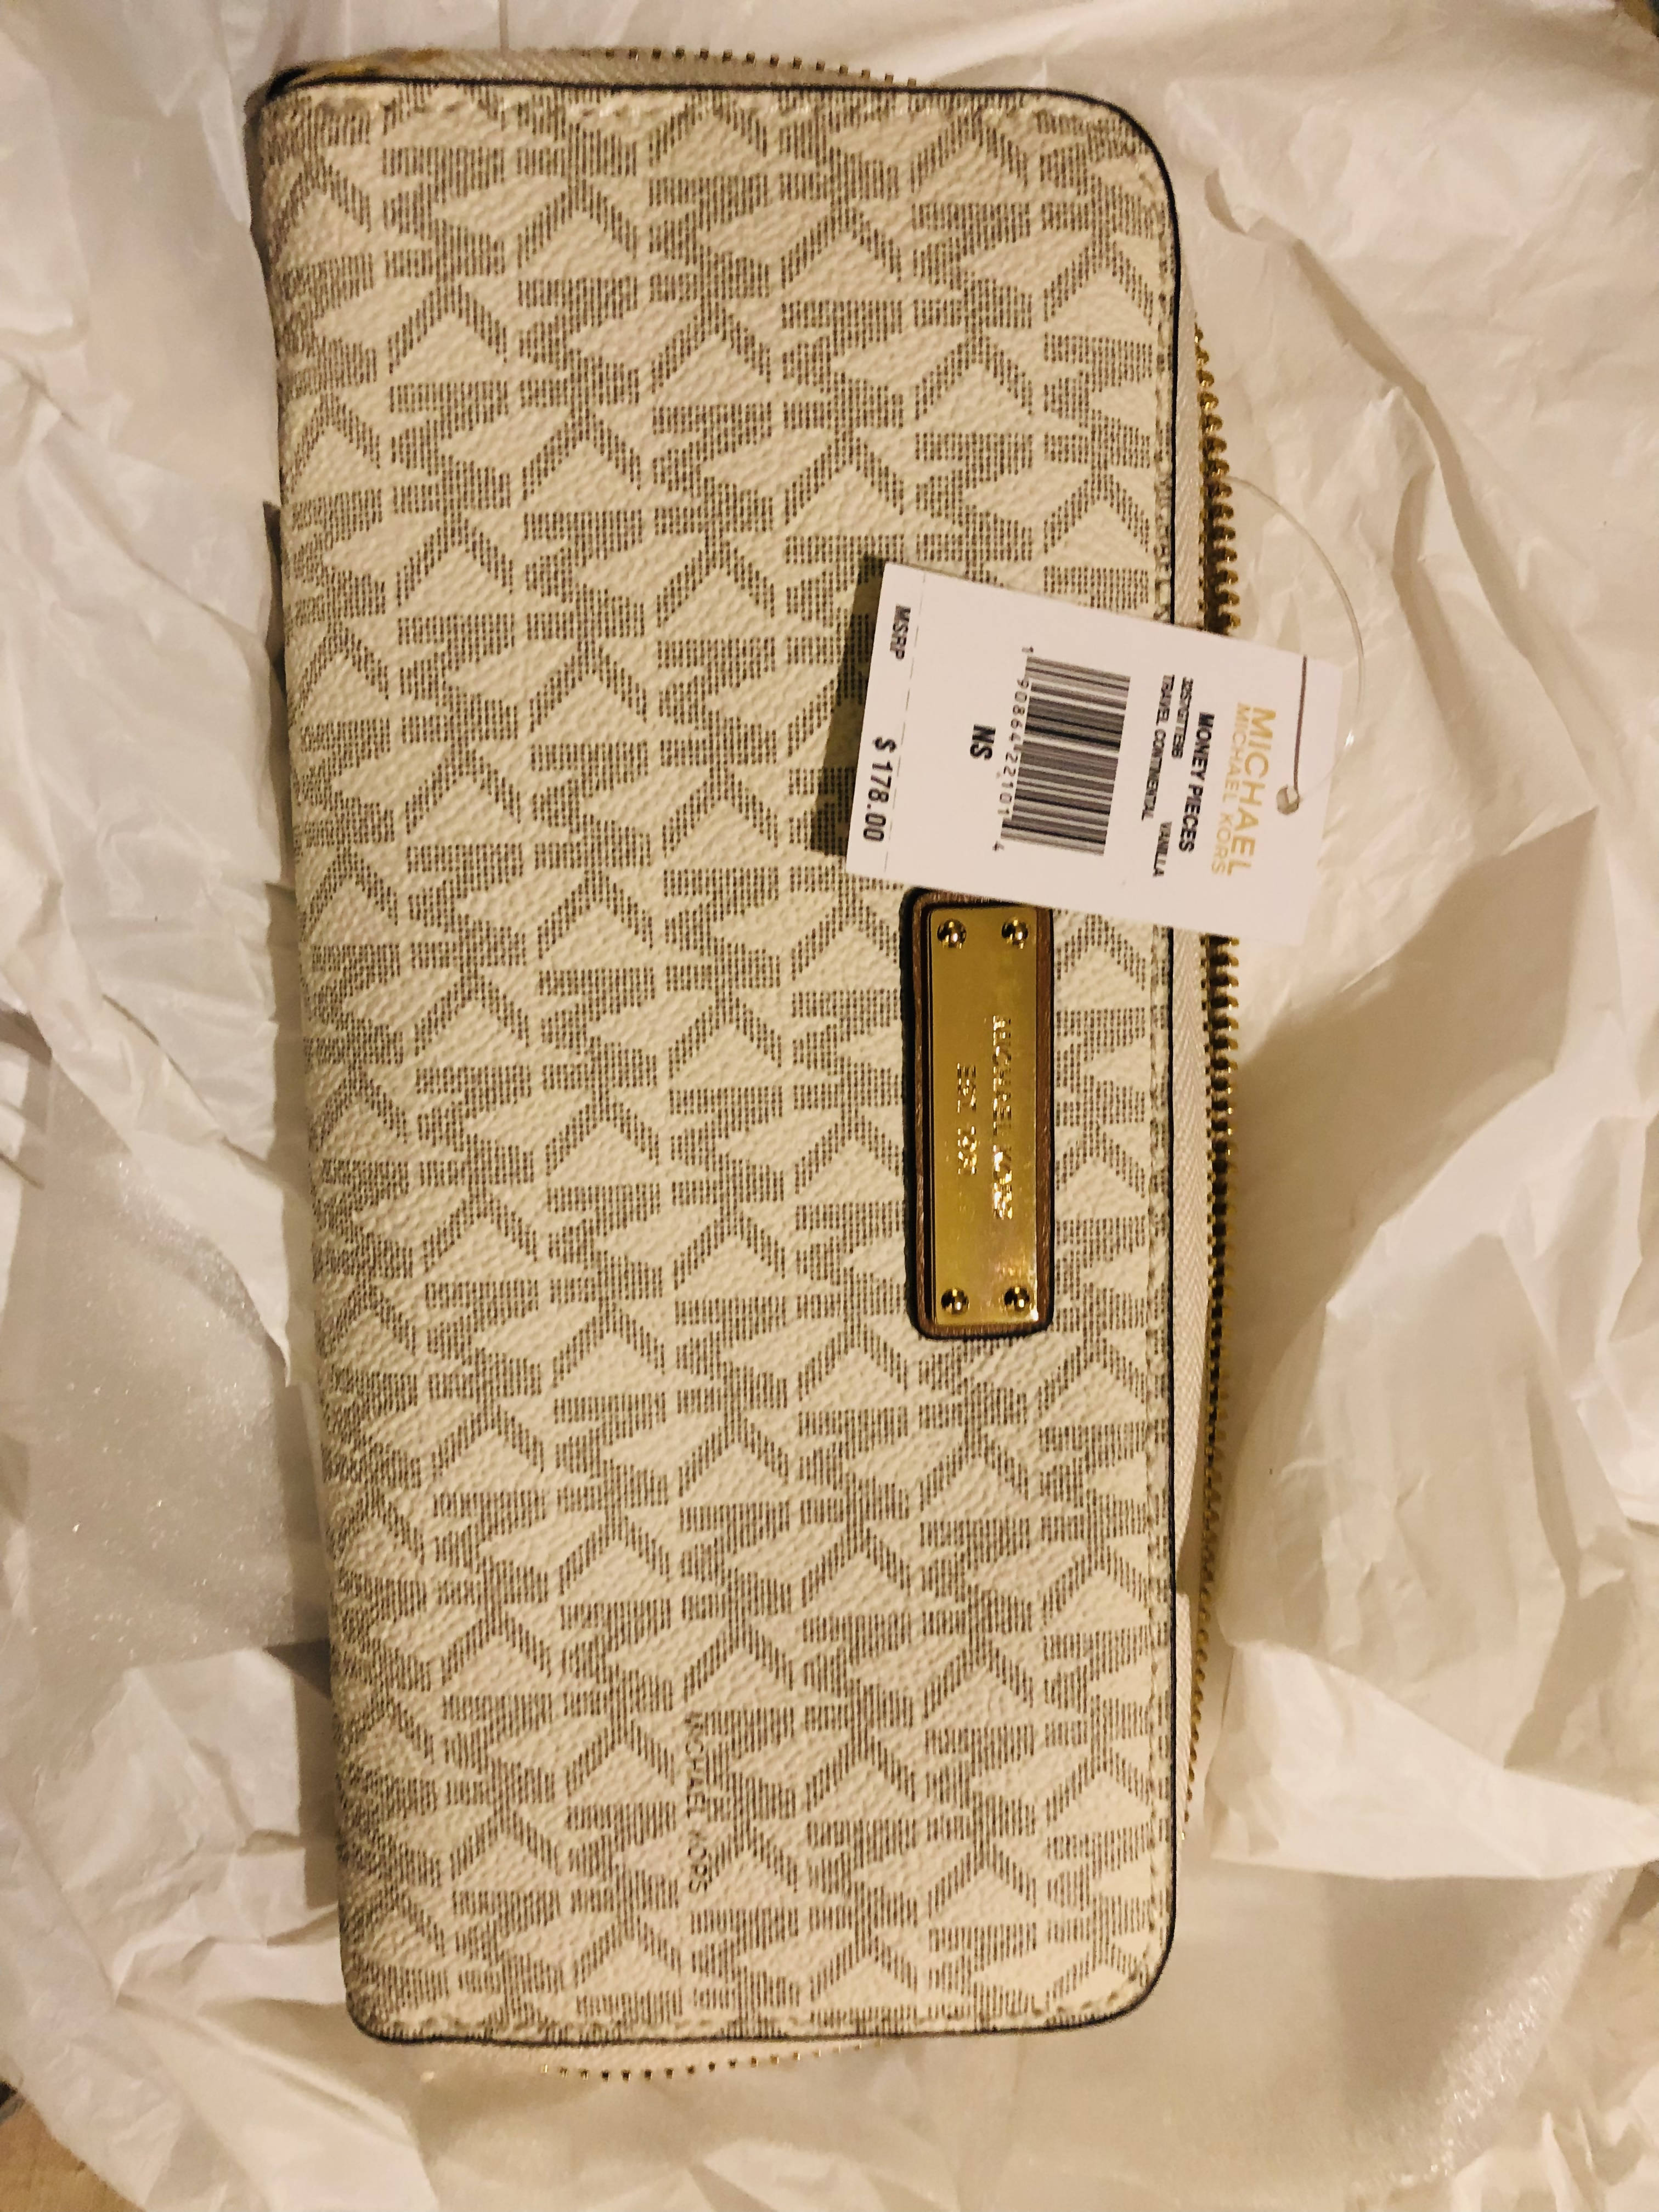 Michael Kors | Beige continental wallet | Women Bags | Brand New